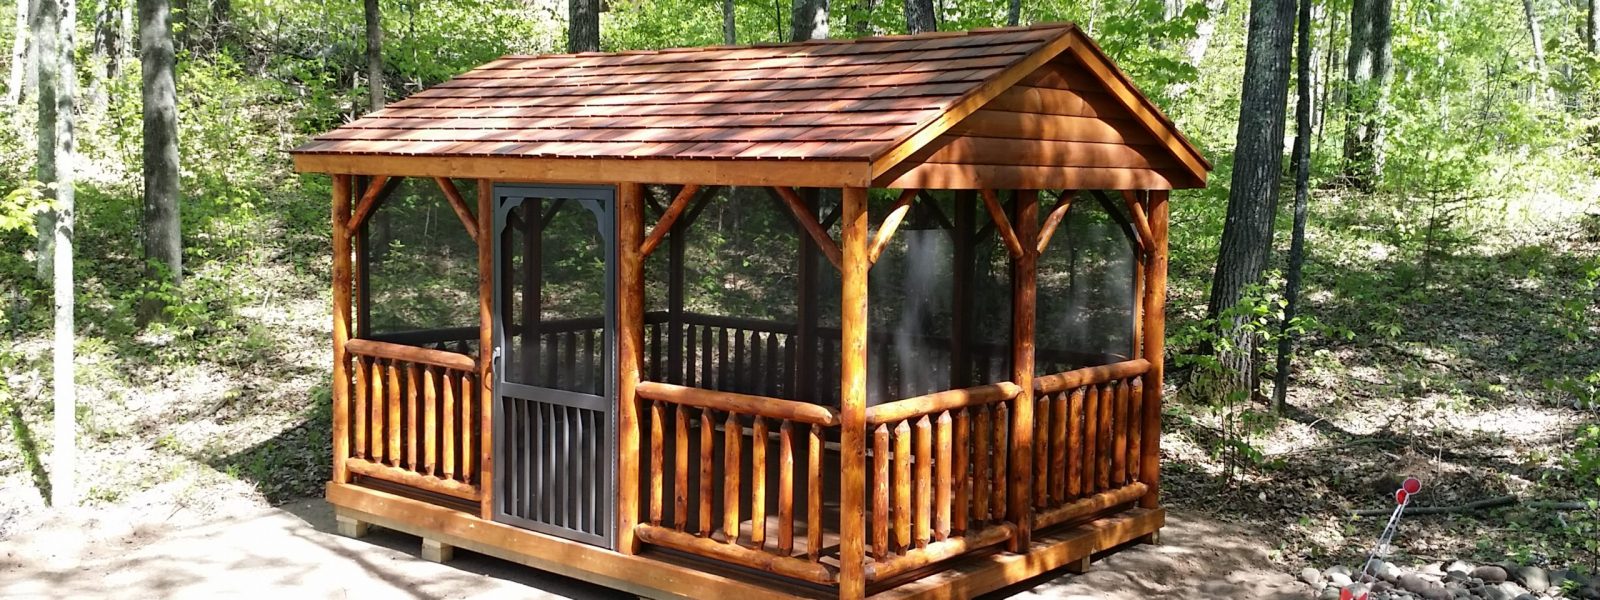 log pavilion for sale in minnesota northwood industries